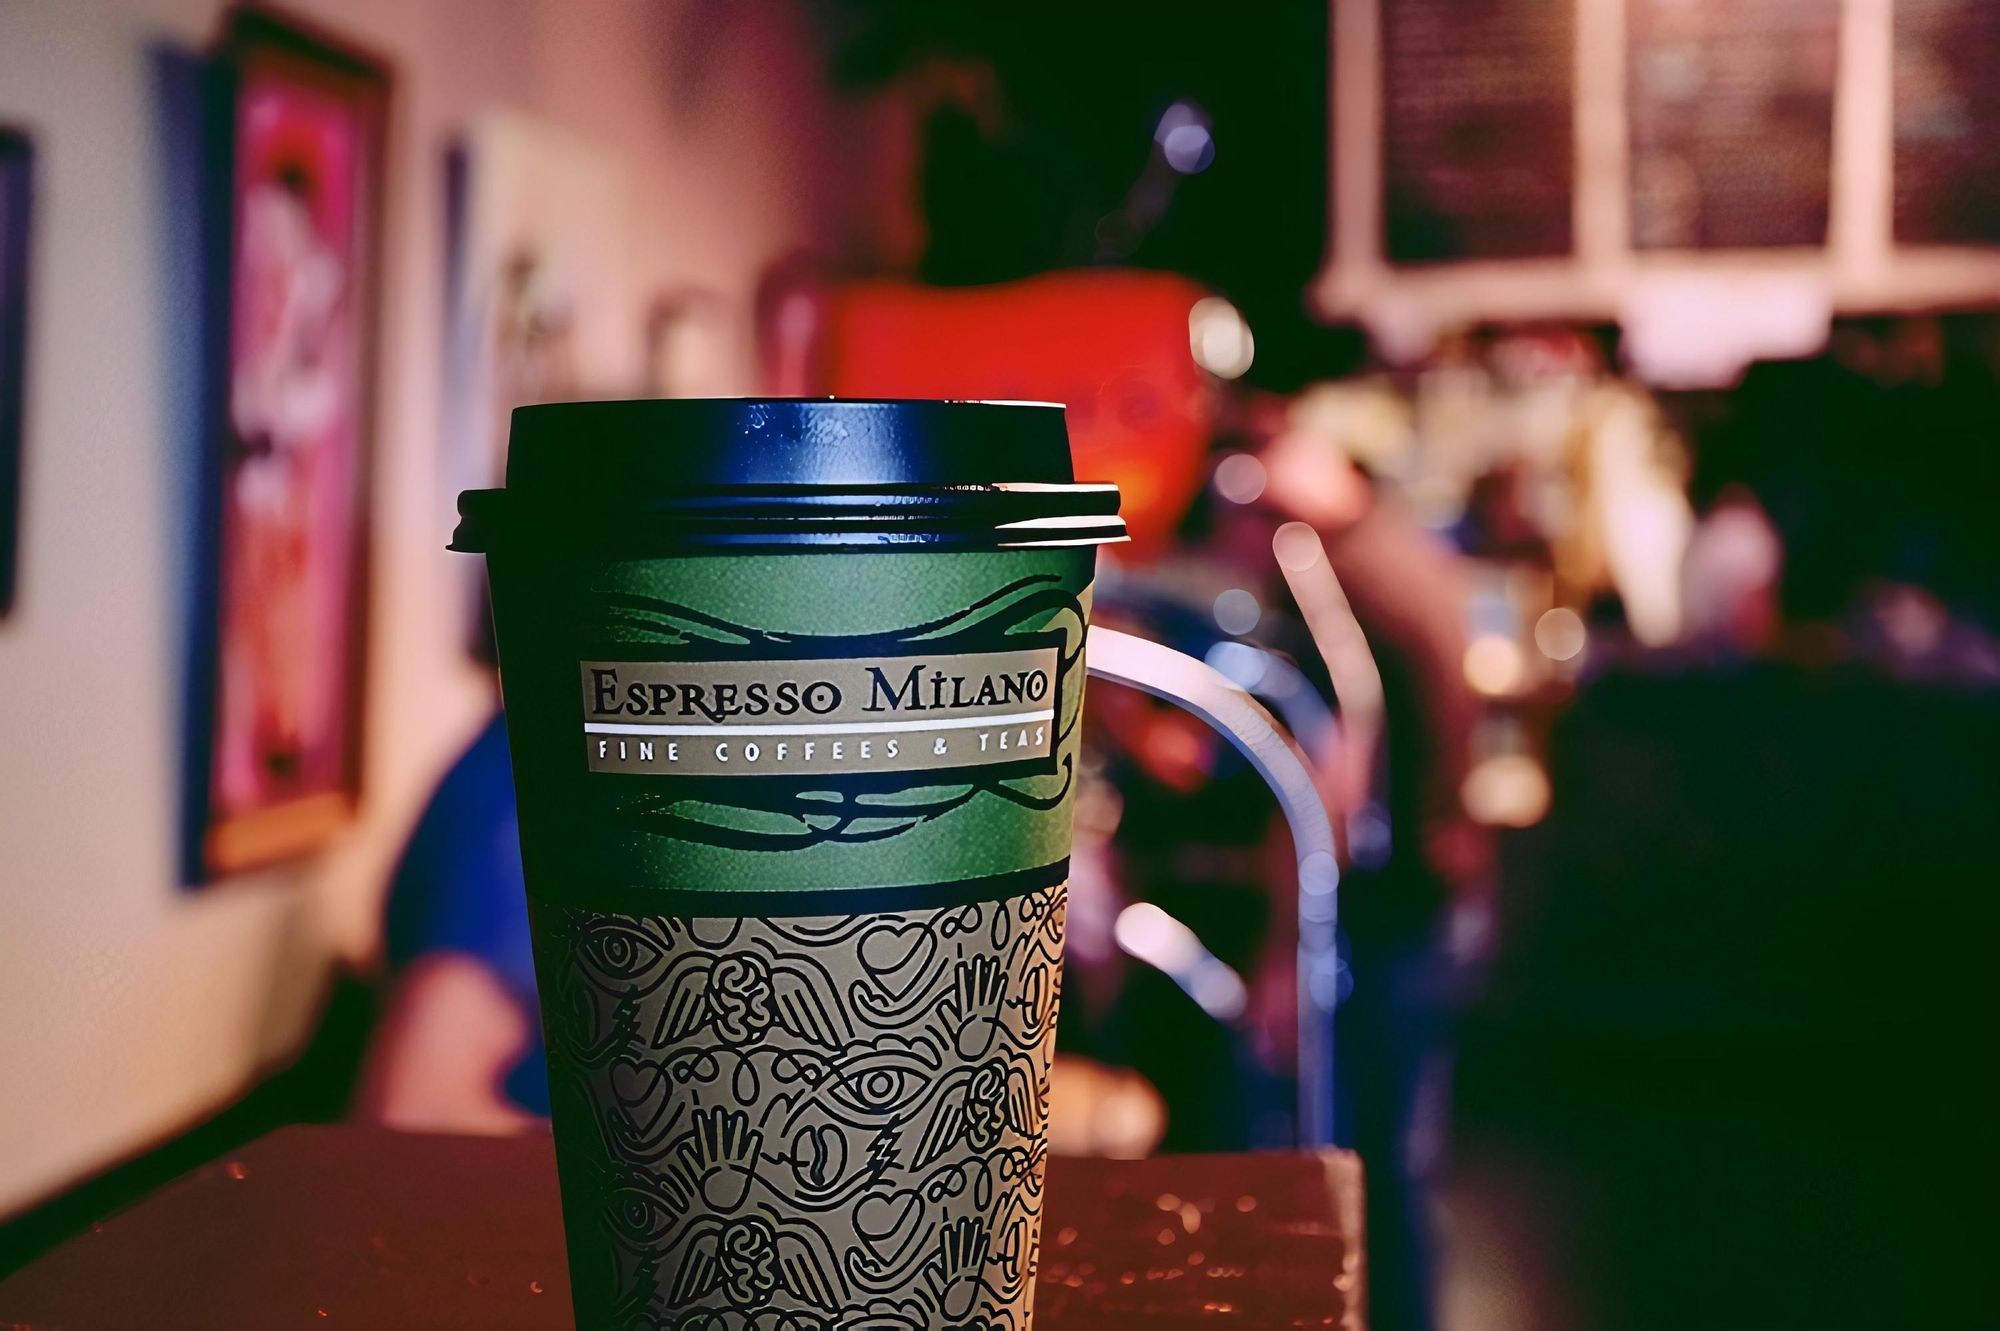 An Espresso Milano coffee cup